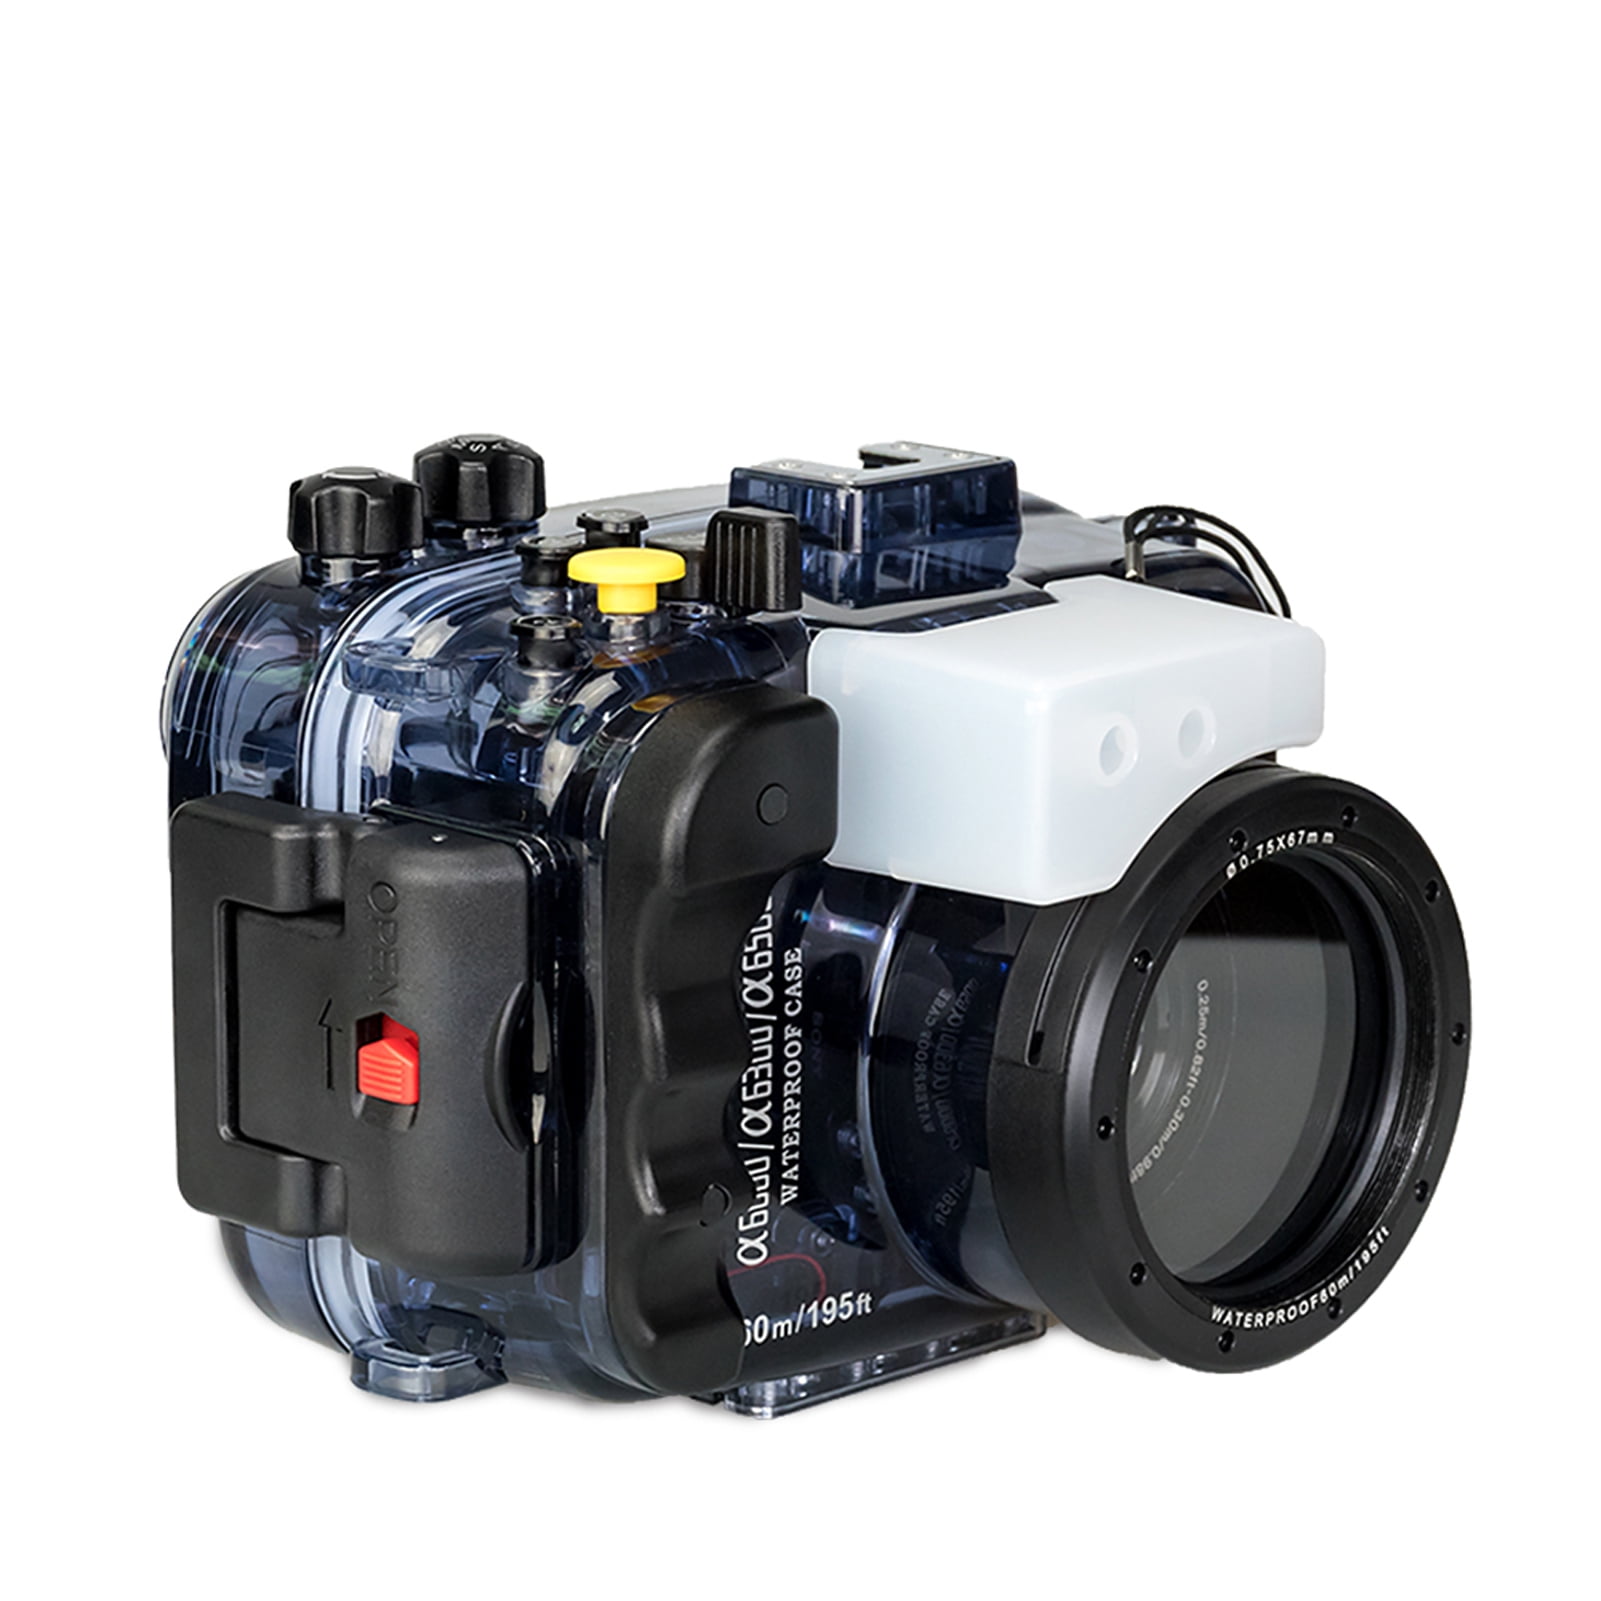 Grey 30m Waterproof Diving Filter Lens Cover Protective Housing Case for AKASO EK7000 